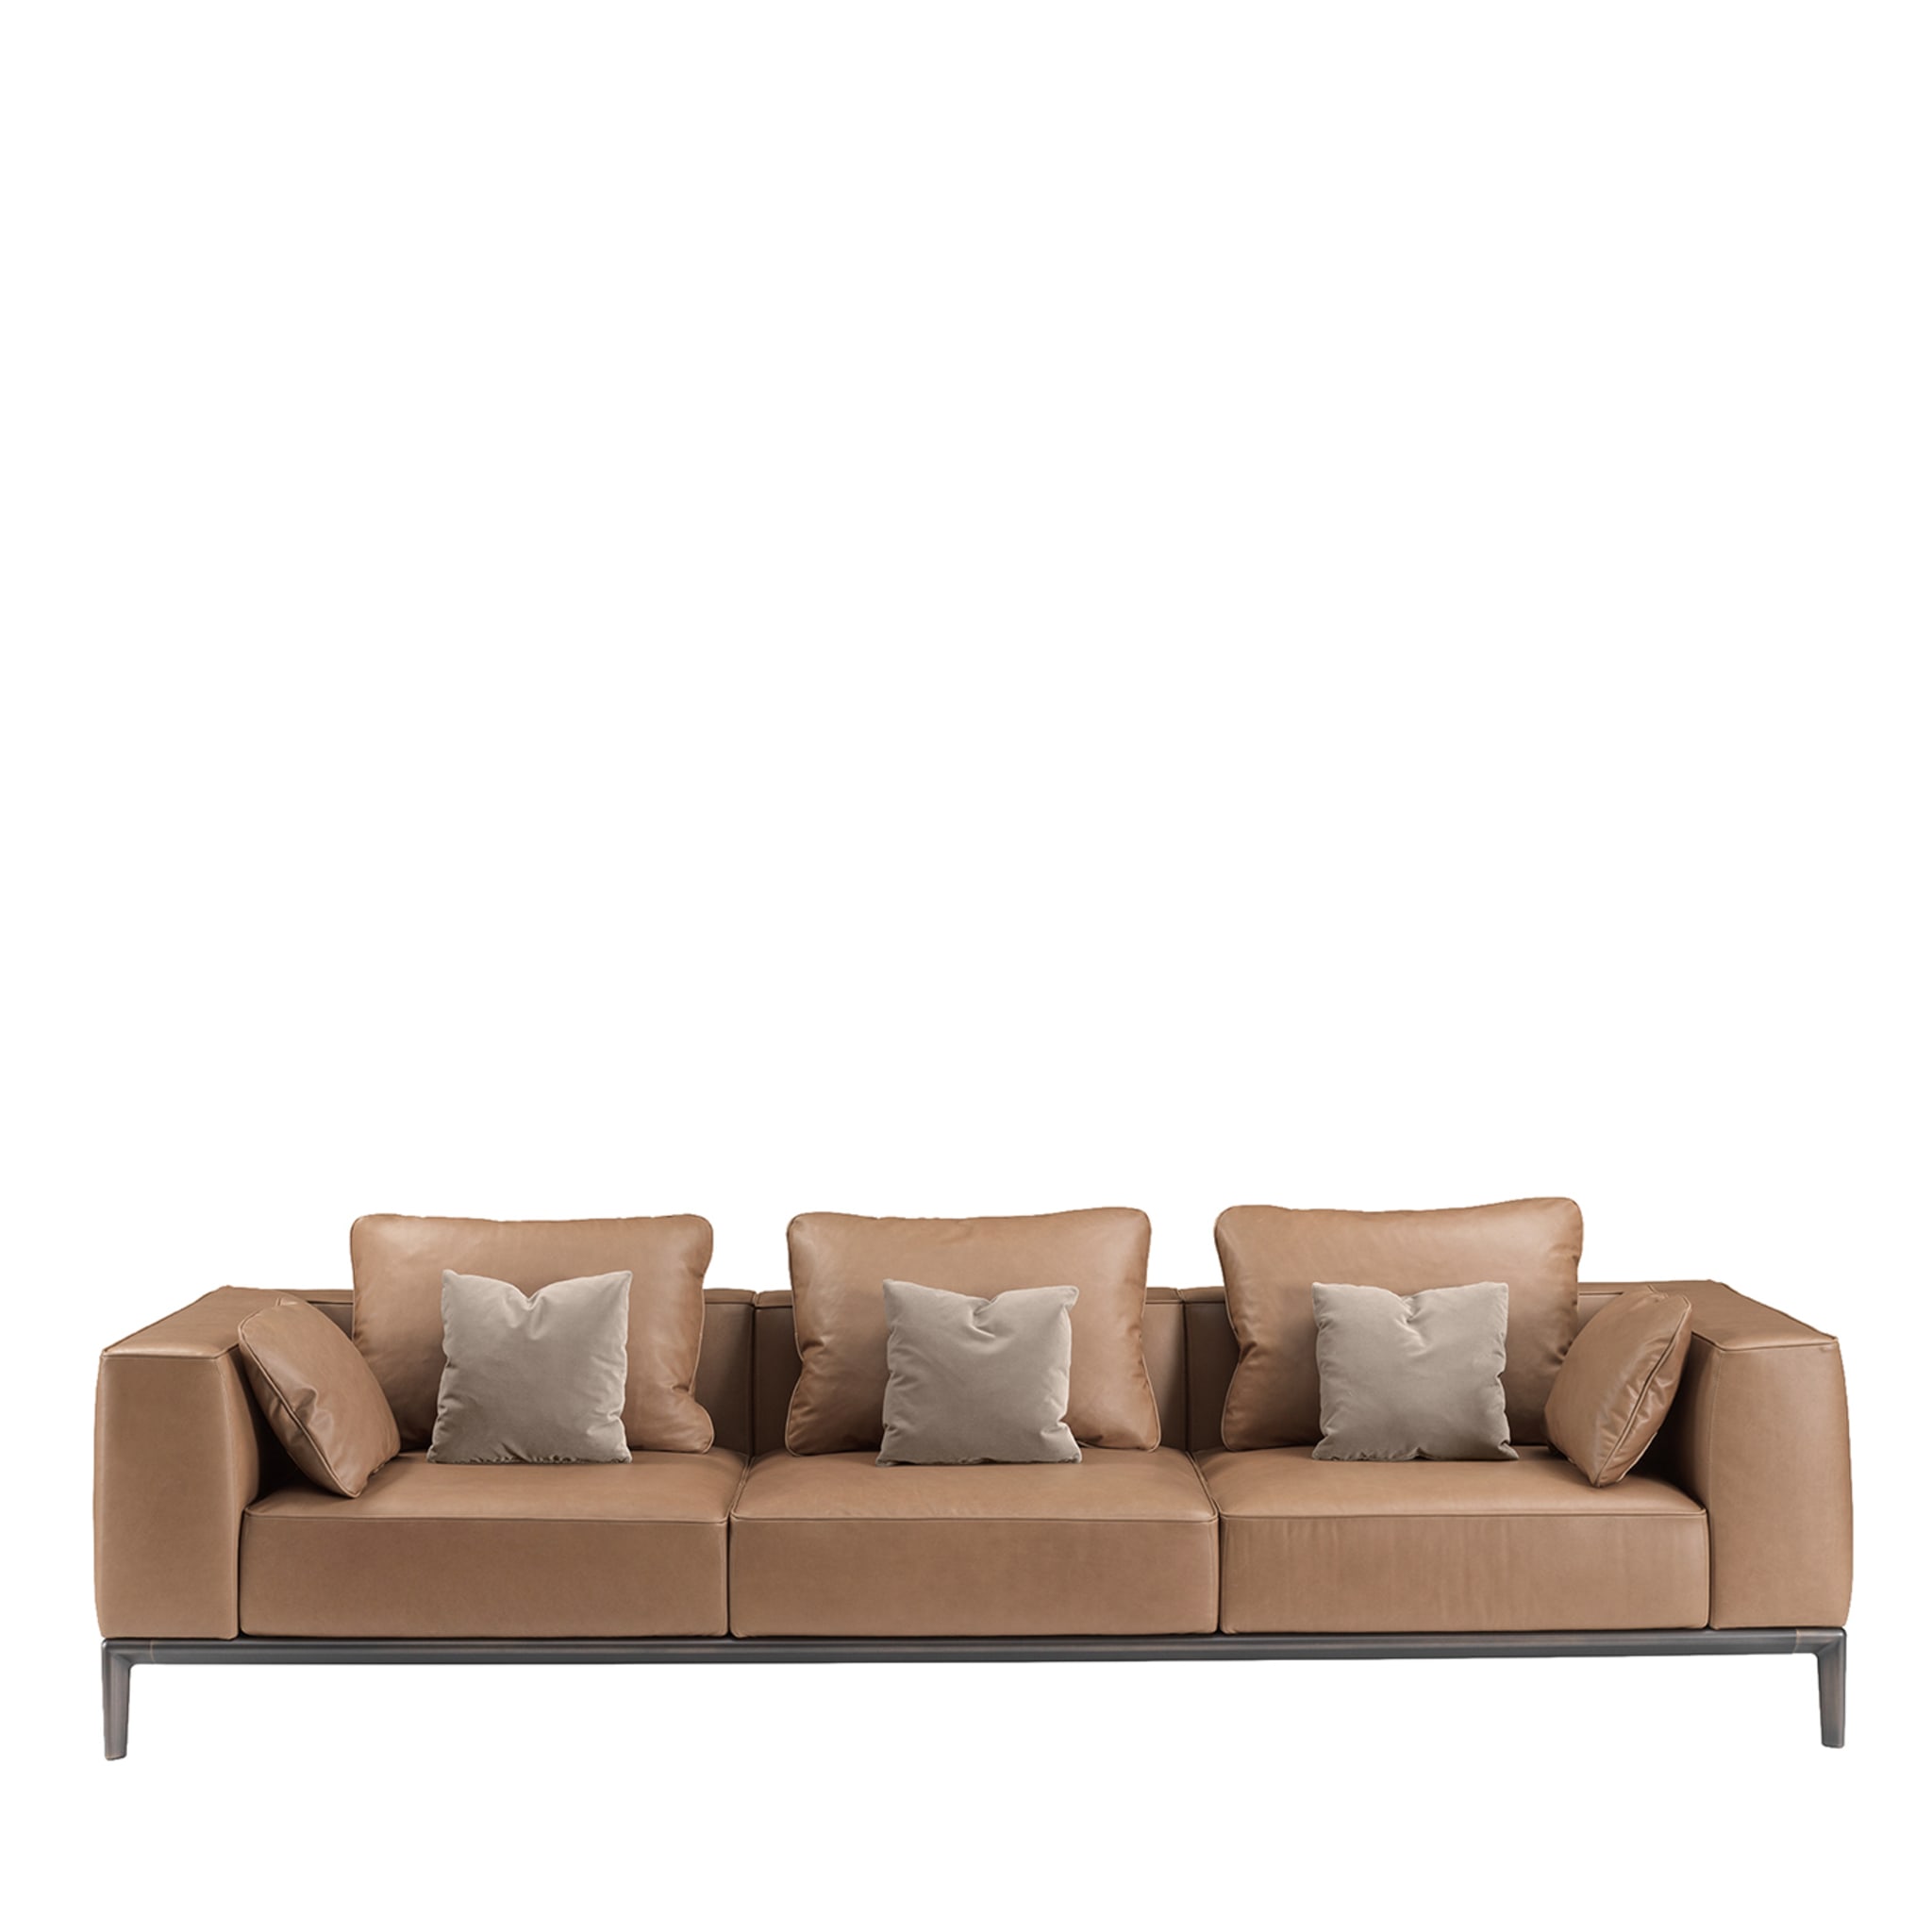 Milo Brown Leather Sofa by Stefano Giovannoni - Main view